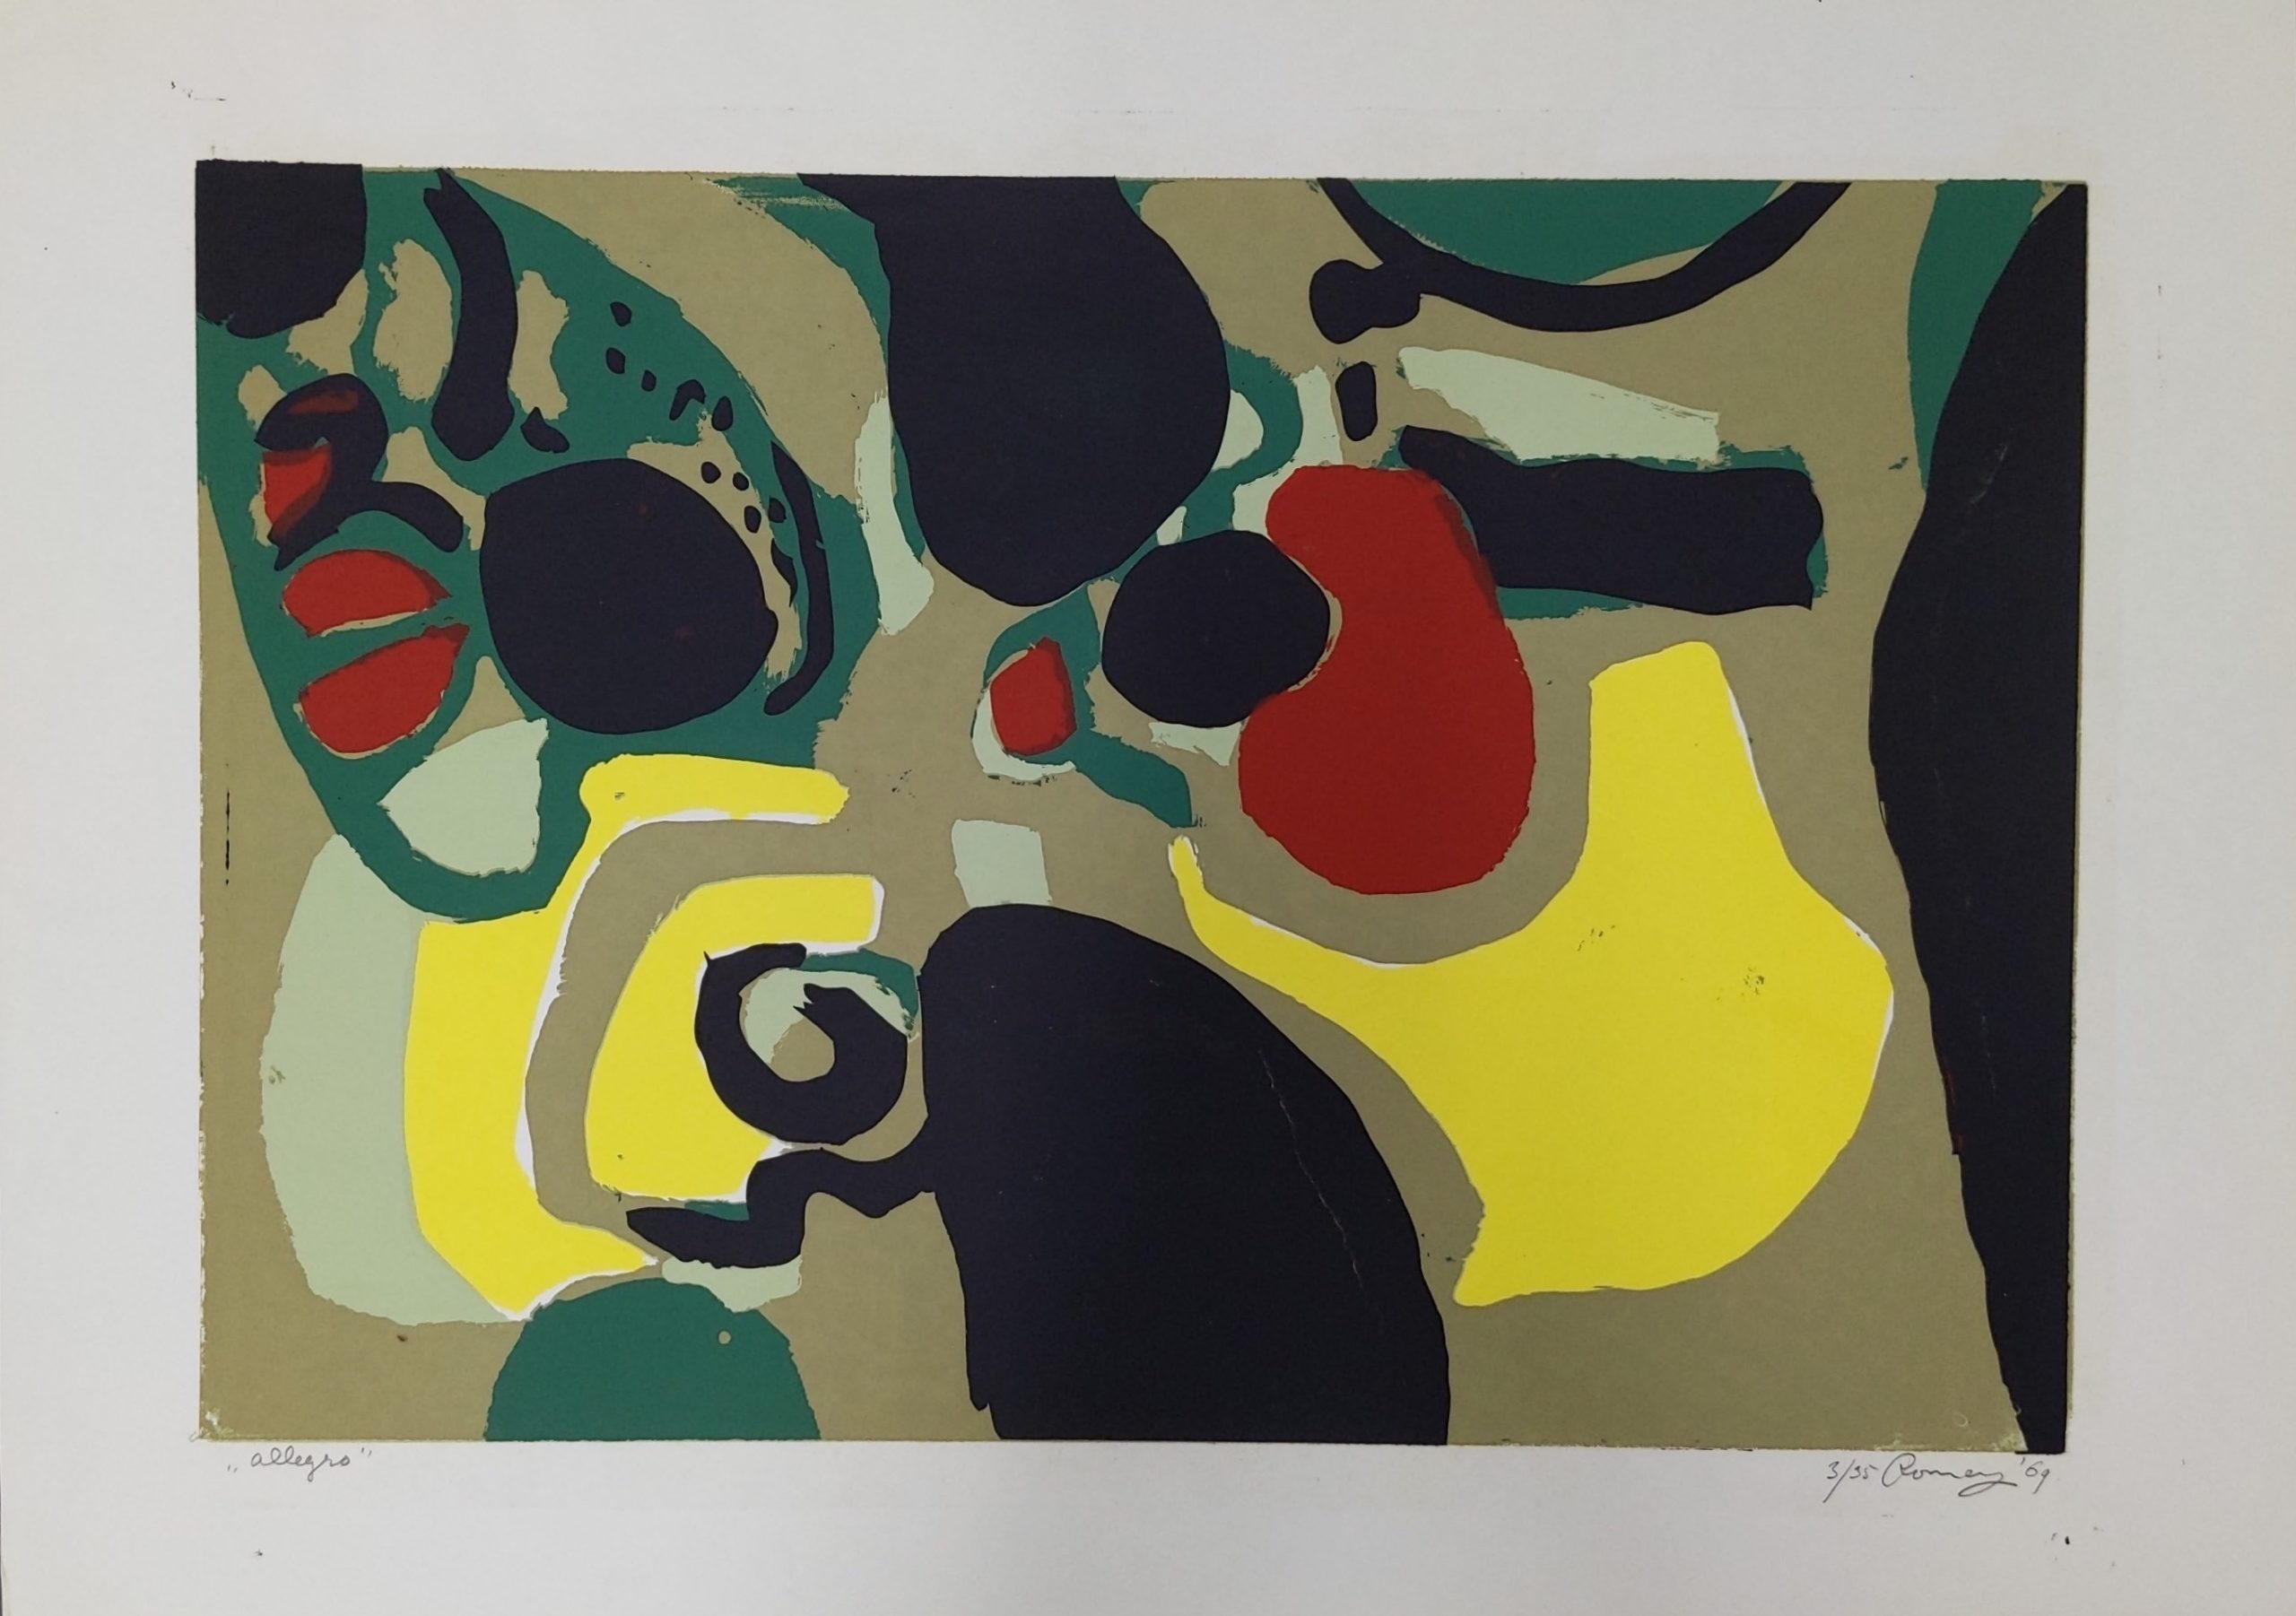 "Soleil nuit",1970, screentryck, 45 x 61 cm. Ed. 24. 3 200 kr (320 €)